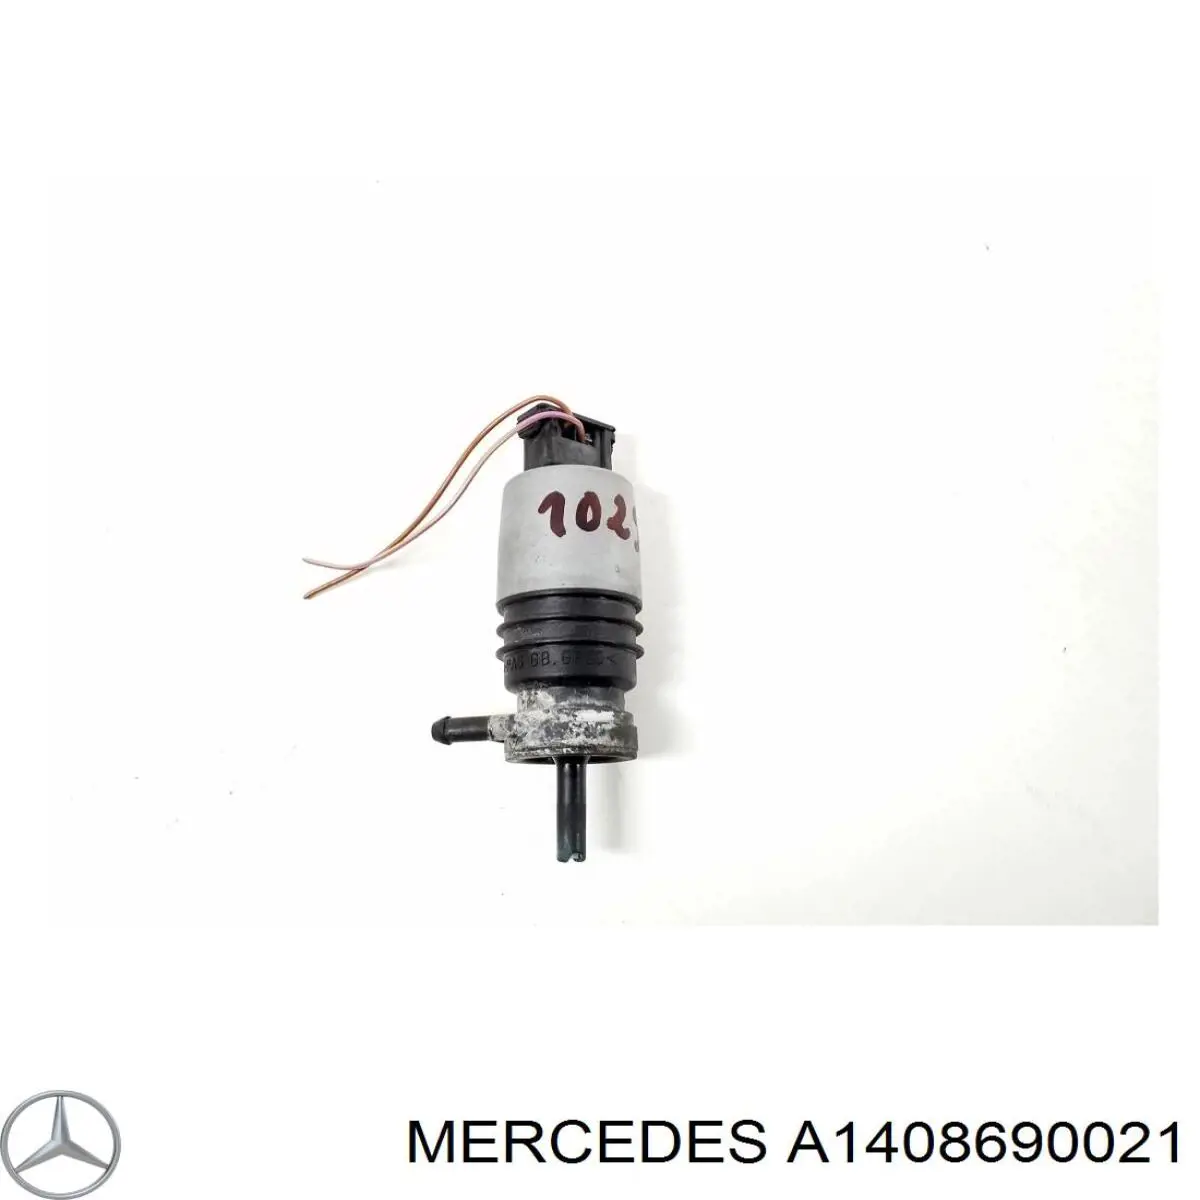 A1408690021 Mercedes bomba de motor de fluido para lavador de vidro dianteiro